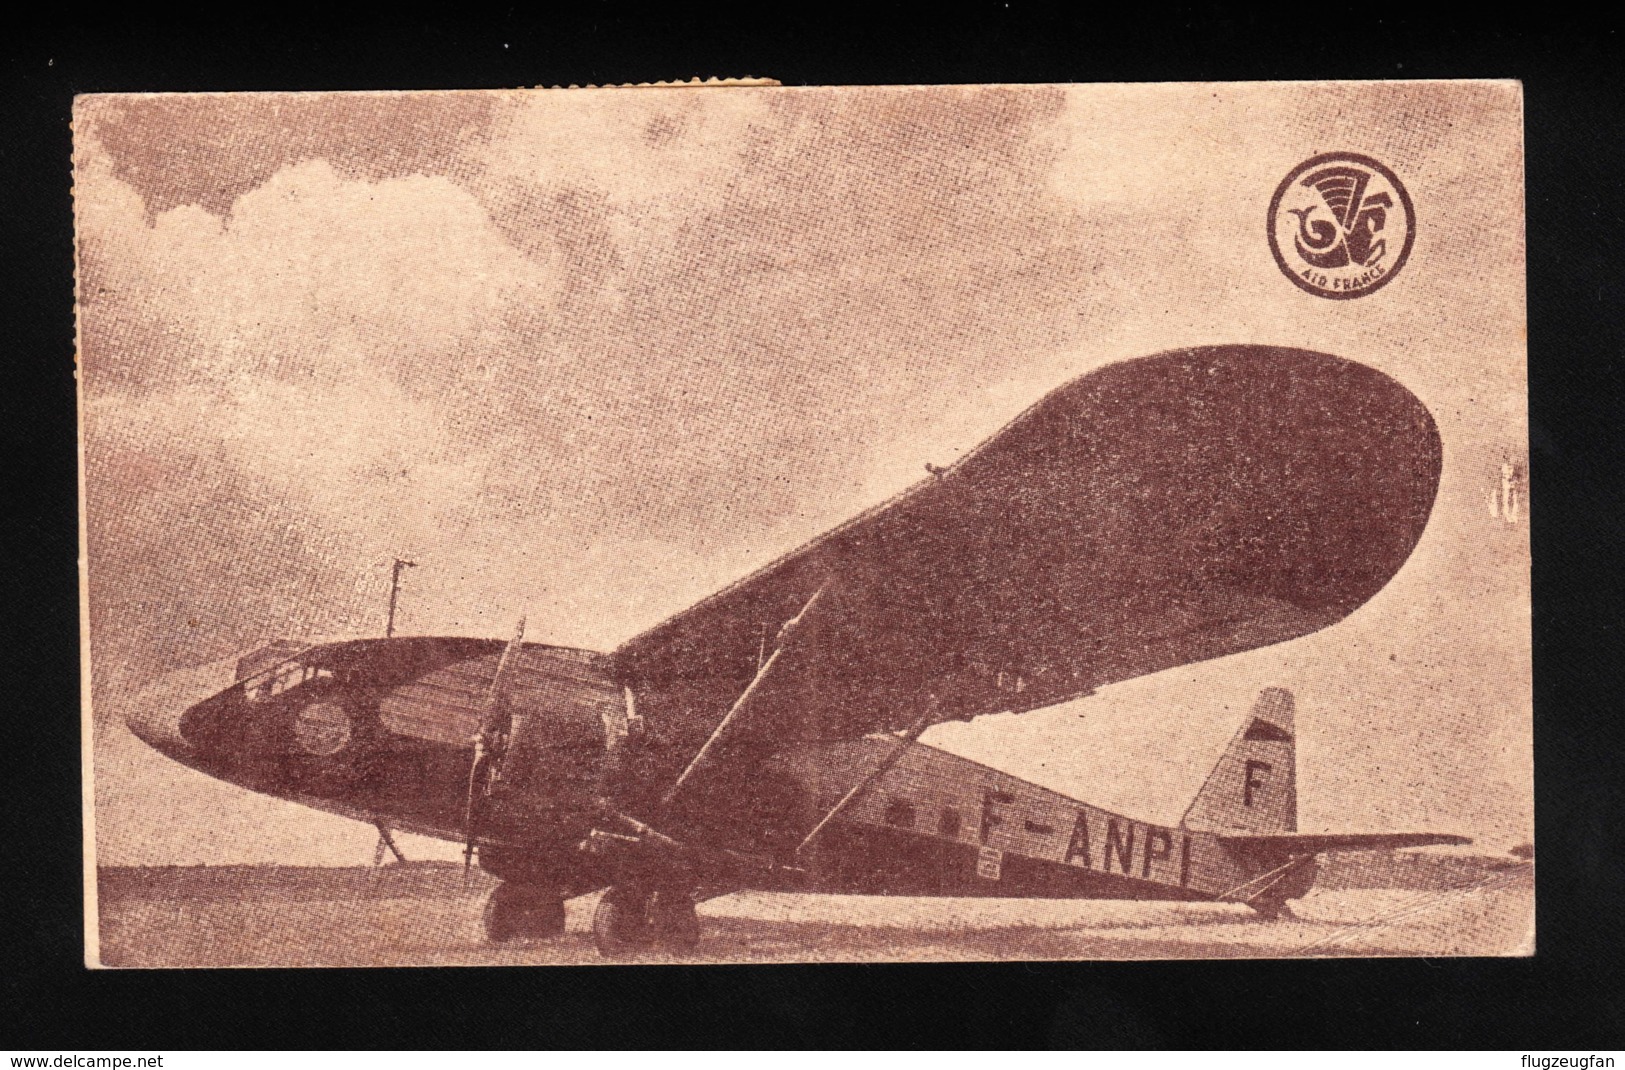 Air France Faucett Lan Chile Potez 62 Peru 1937 Airmail Postcard Airline Issue - 1919-1938: Entre Guerres